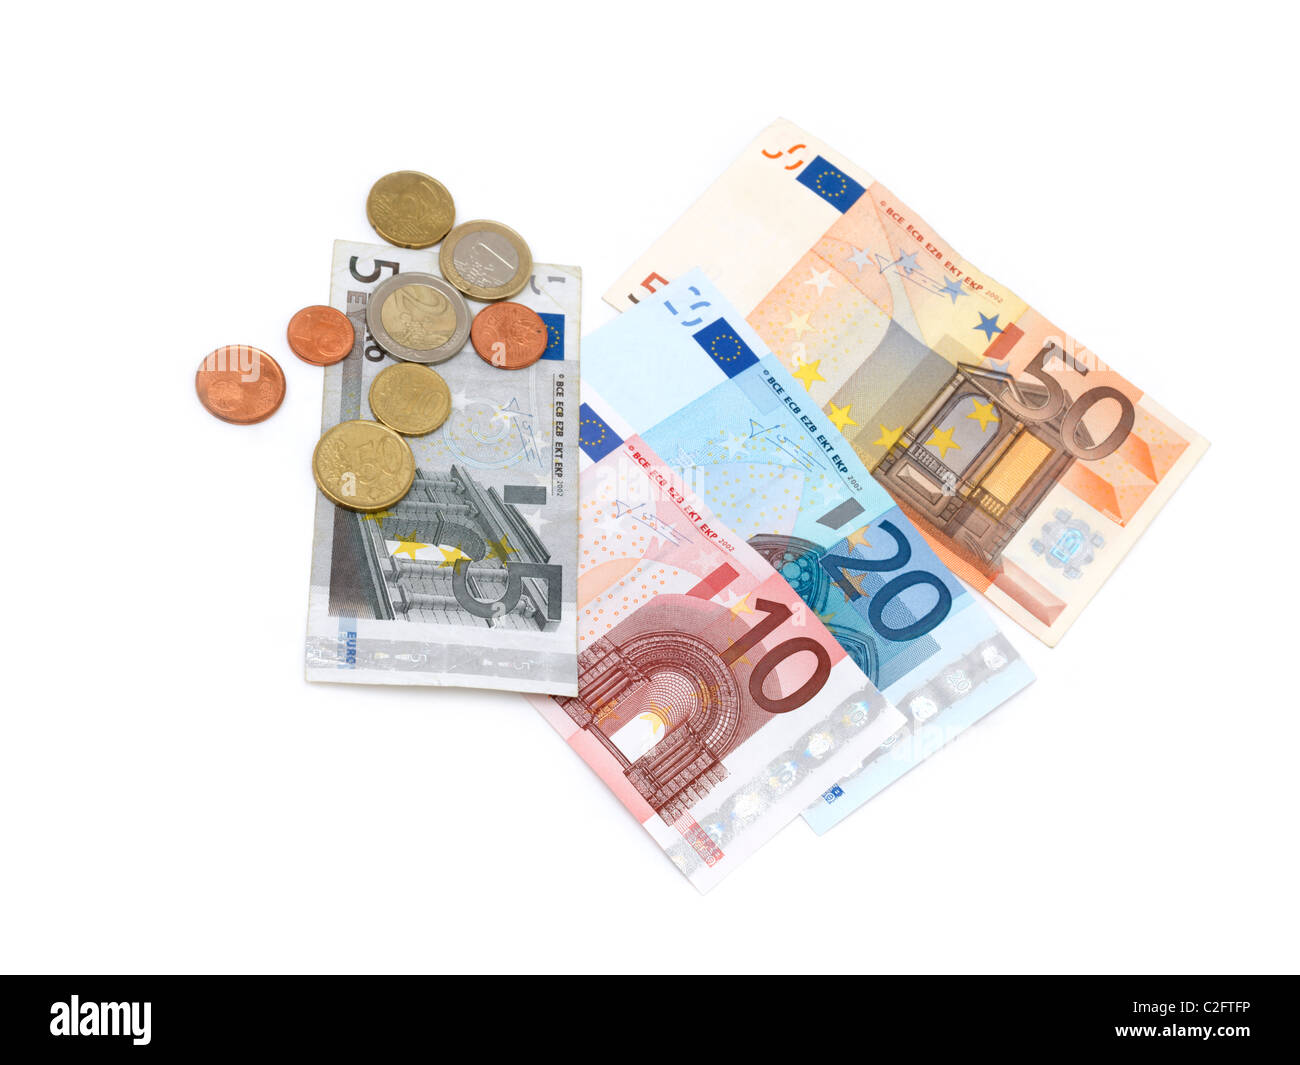 Euros Banknotes And Coins 5,10,20,50 Stock Photo